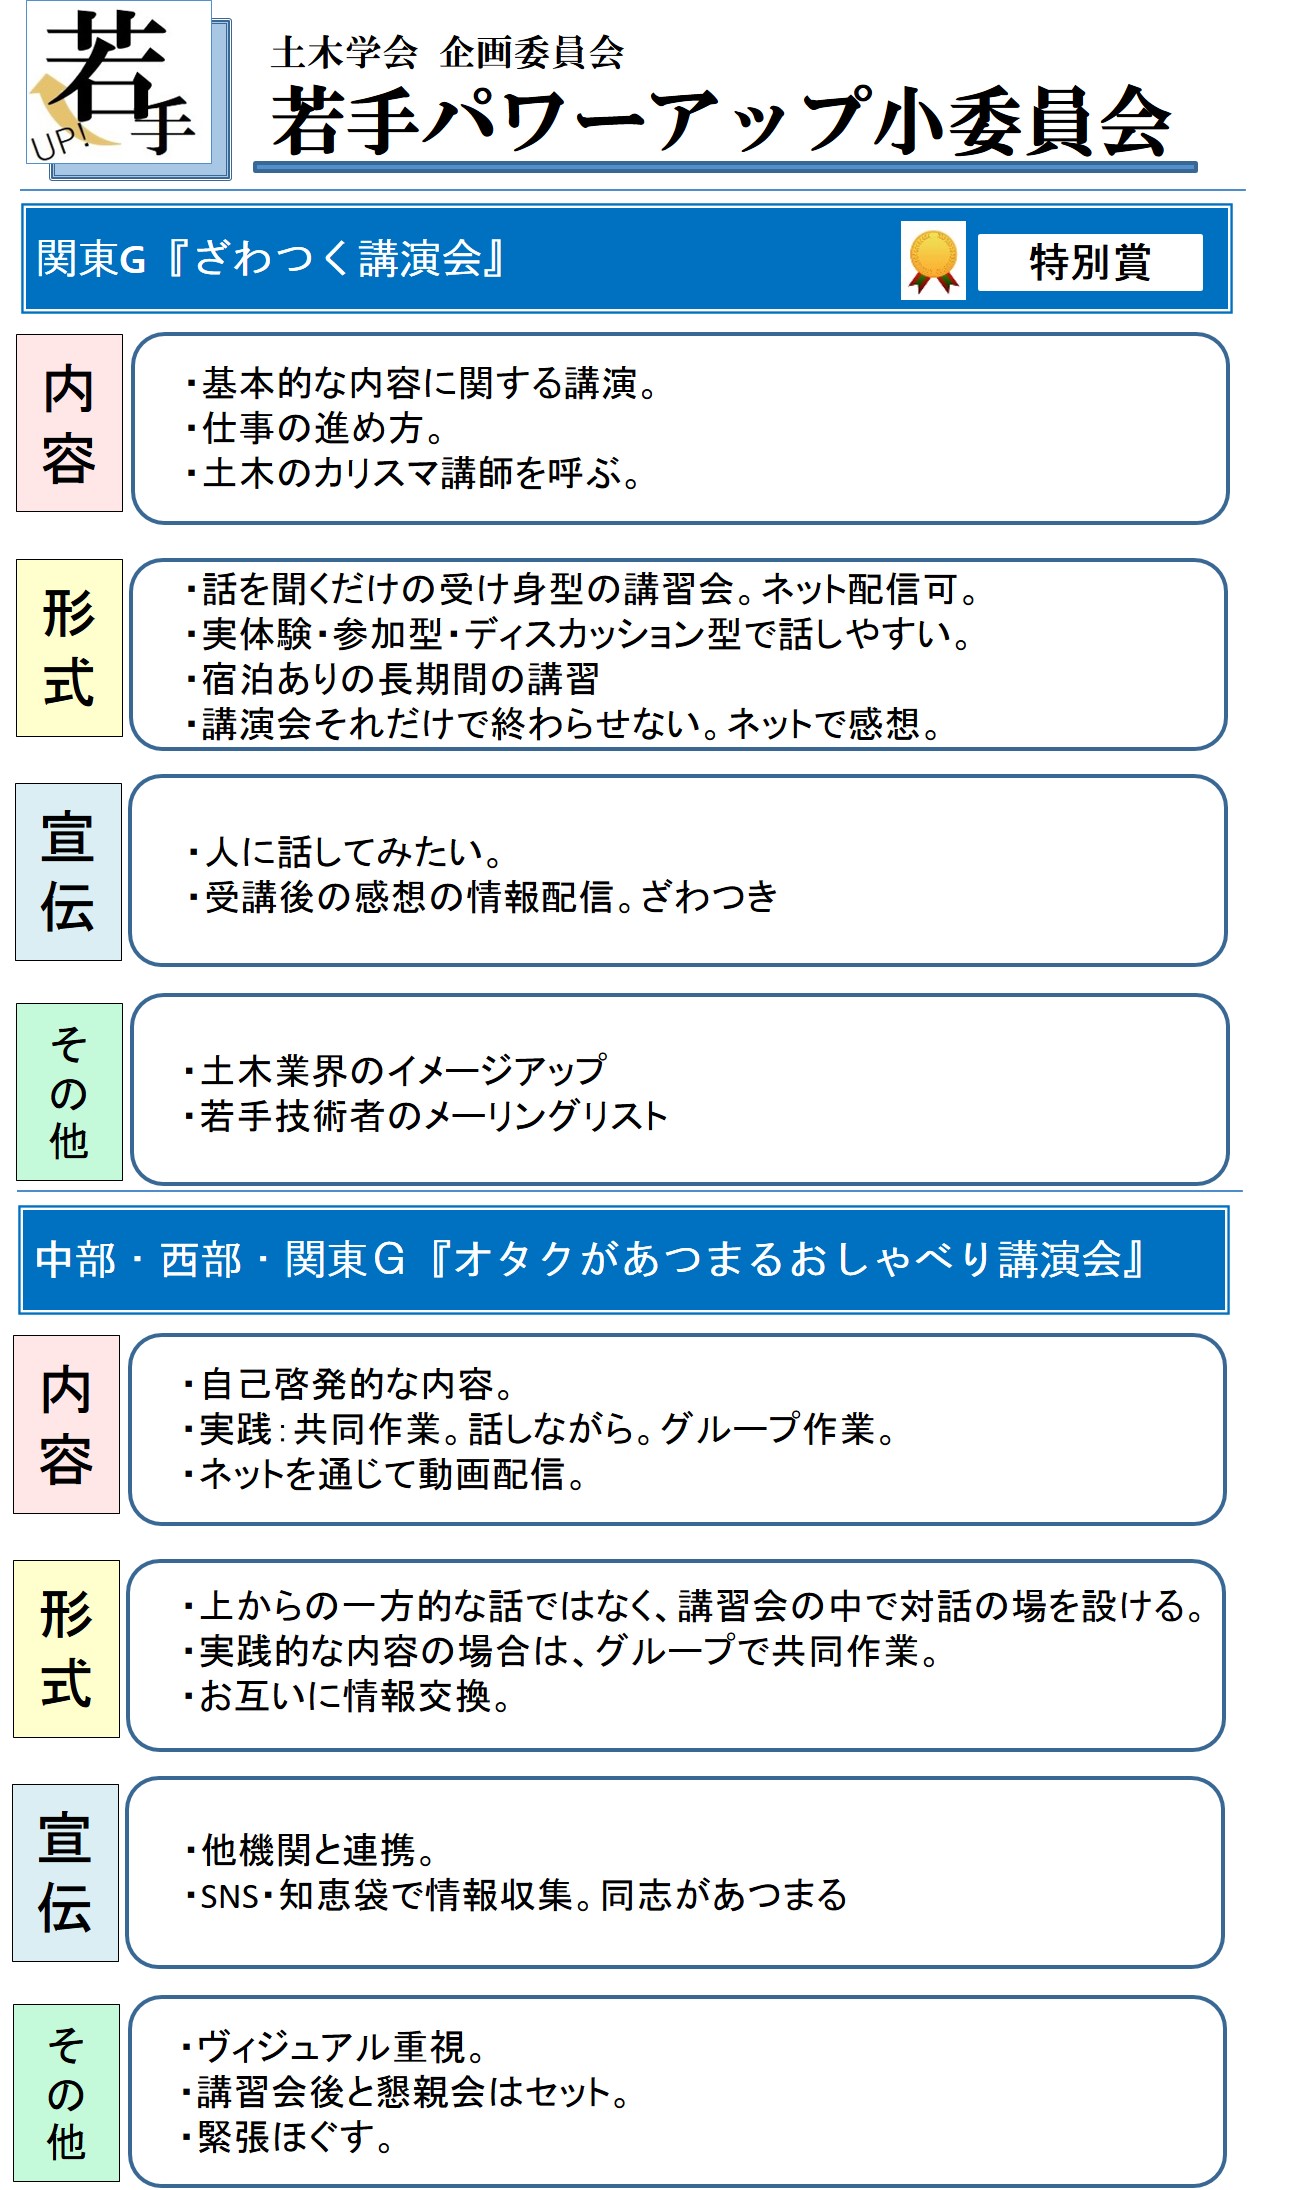 http://committees.jsce.or.jp/kikaku03/system/files/wakateactivity-4.jpg